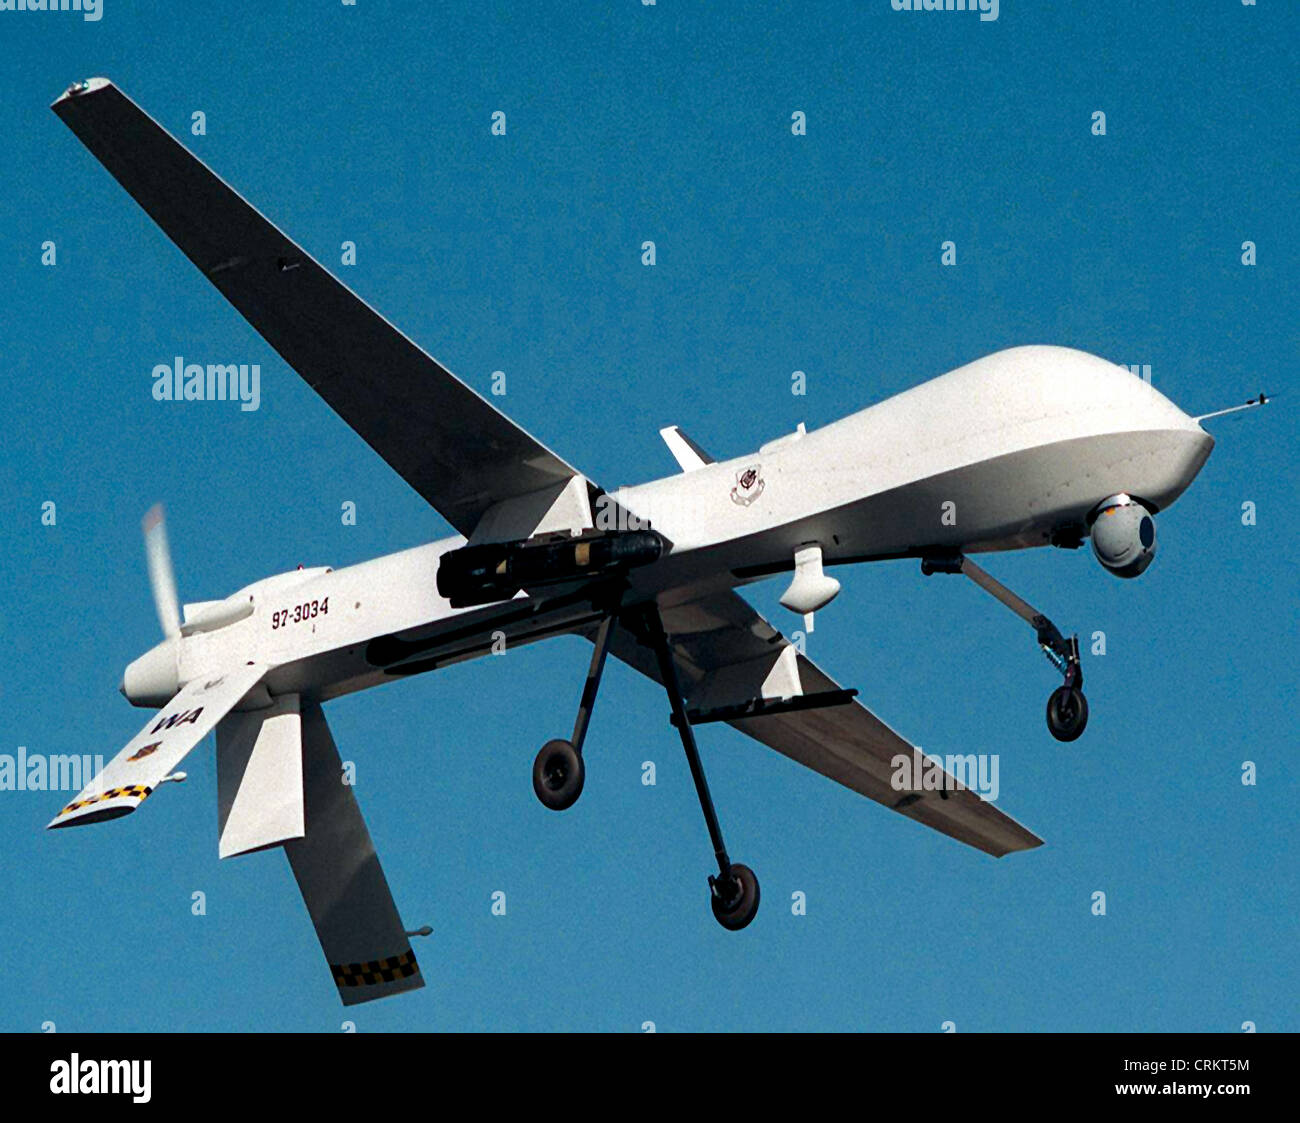 US Air Force MQ-1 Predator drone Photo Stock - Alamy